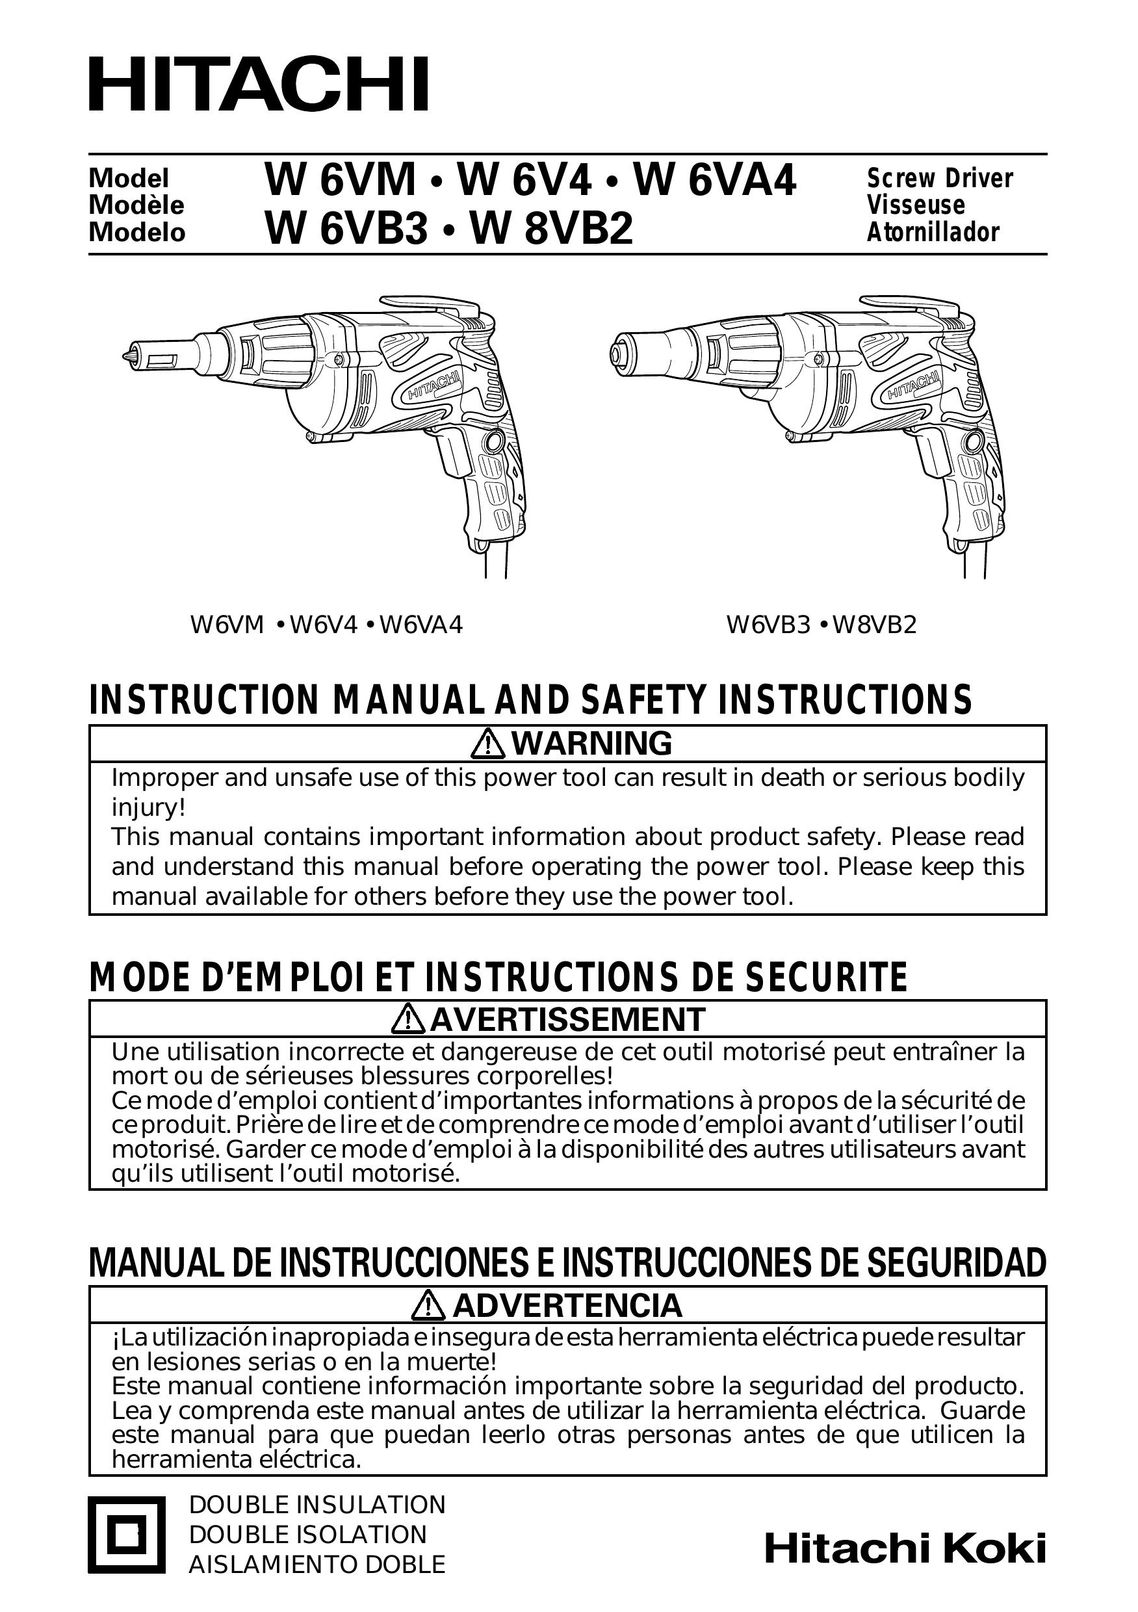 Hitachi Koki USA W6VM Cordless Drill User Manual